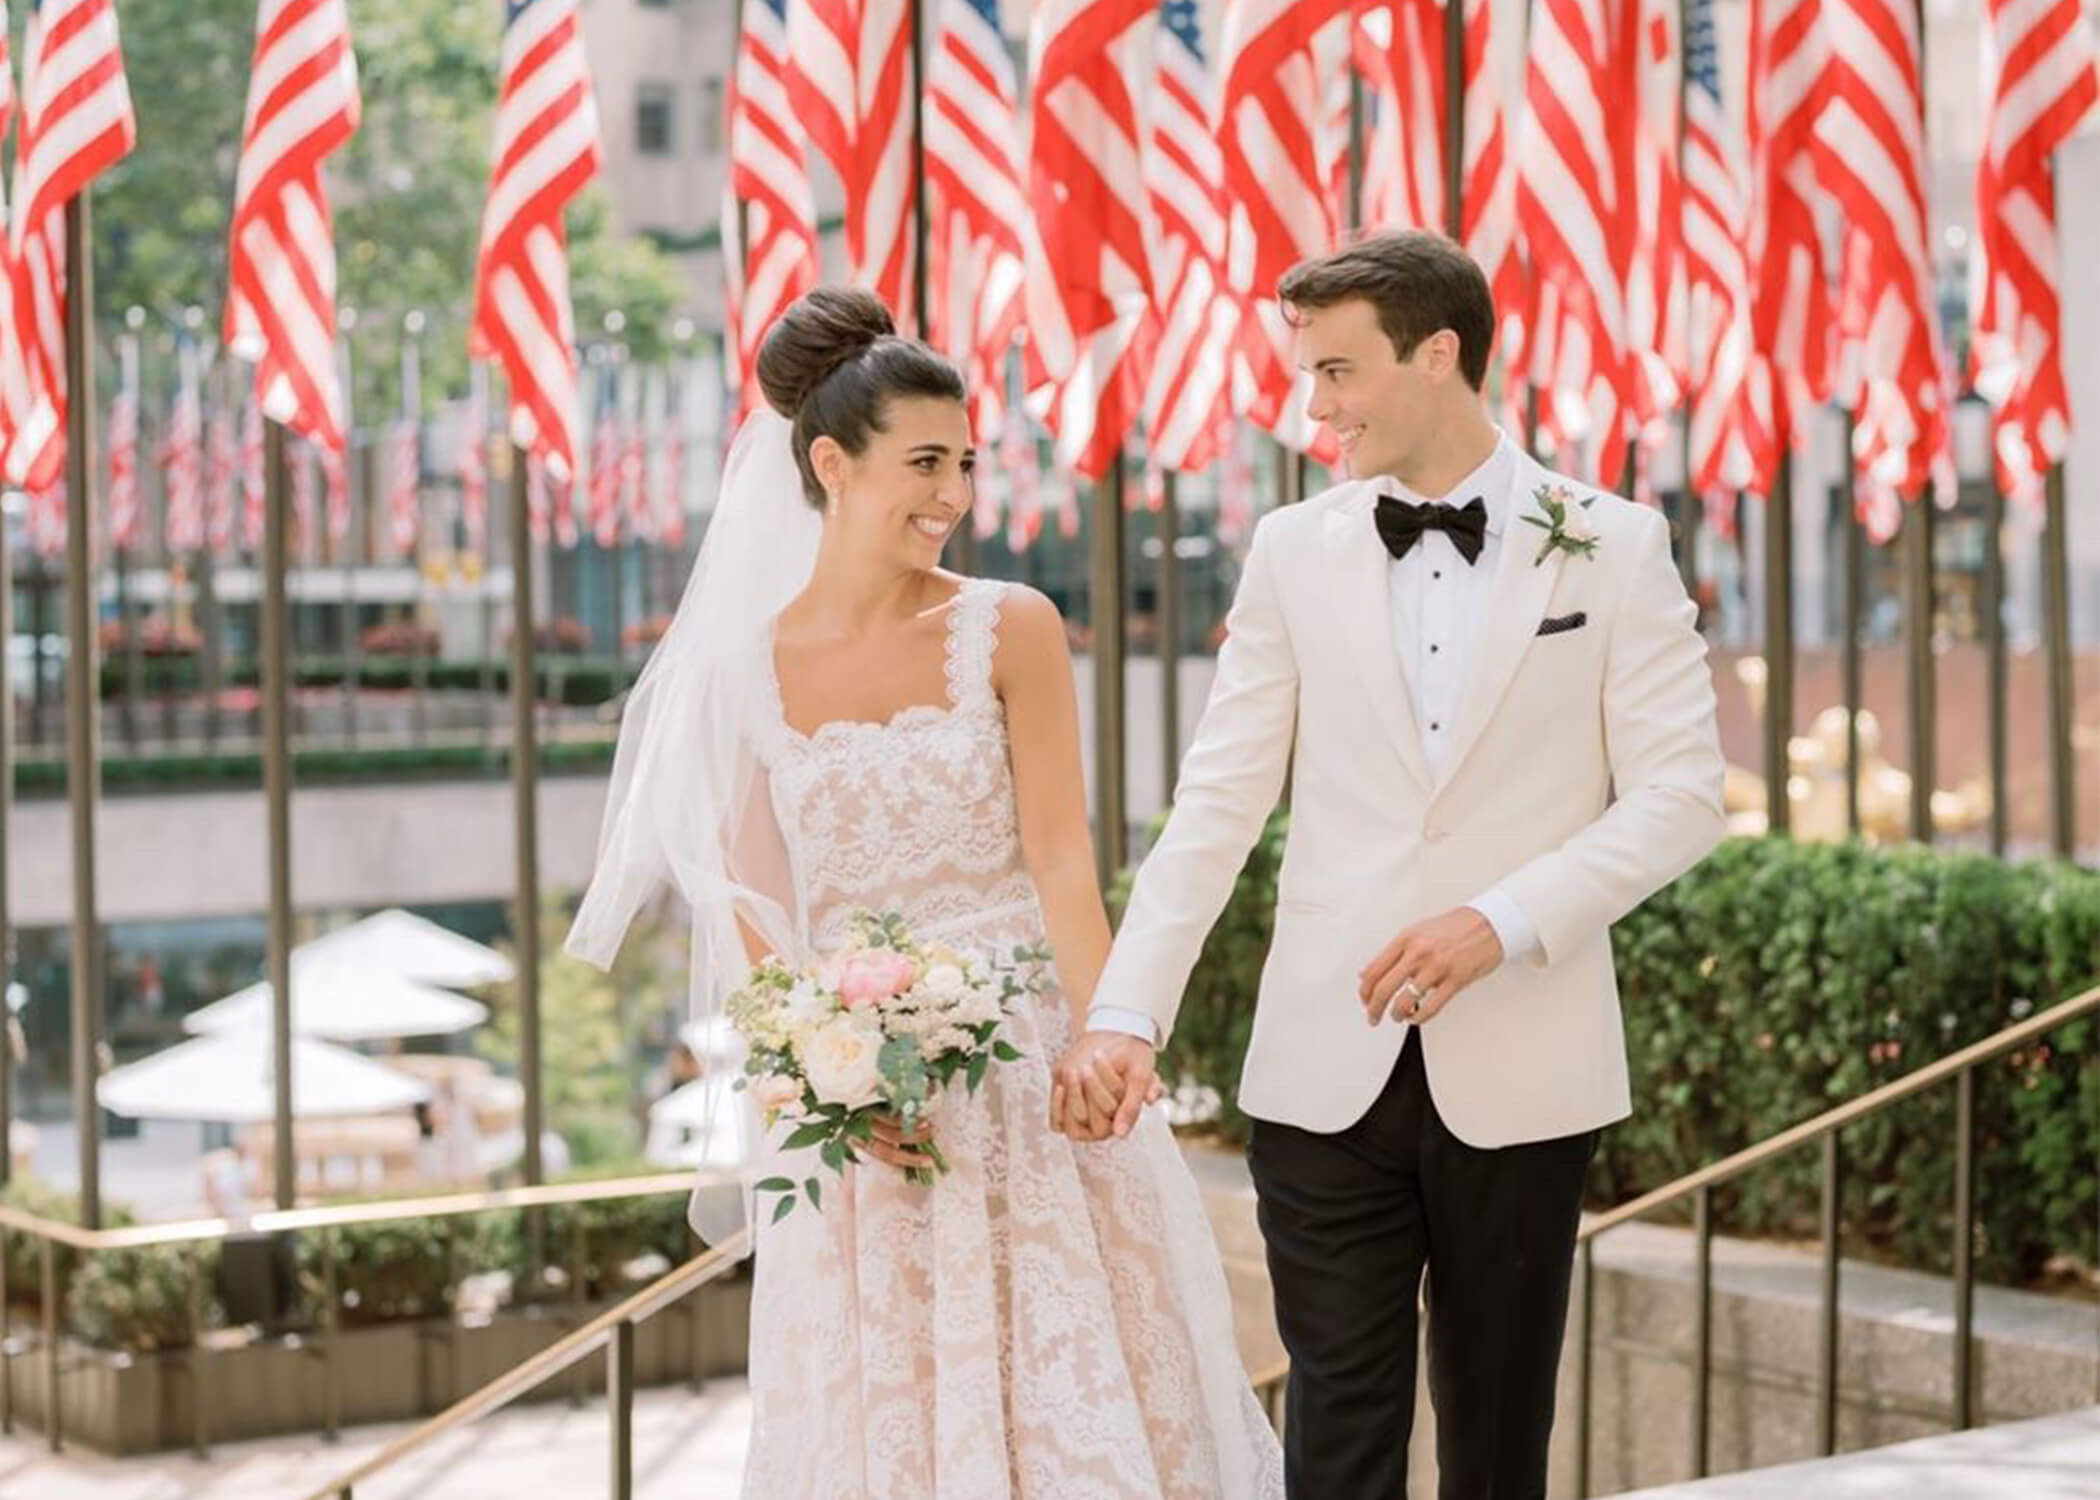 The Top Ten Most Romantic Wedding Dresses